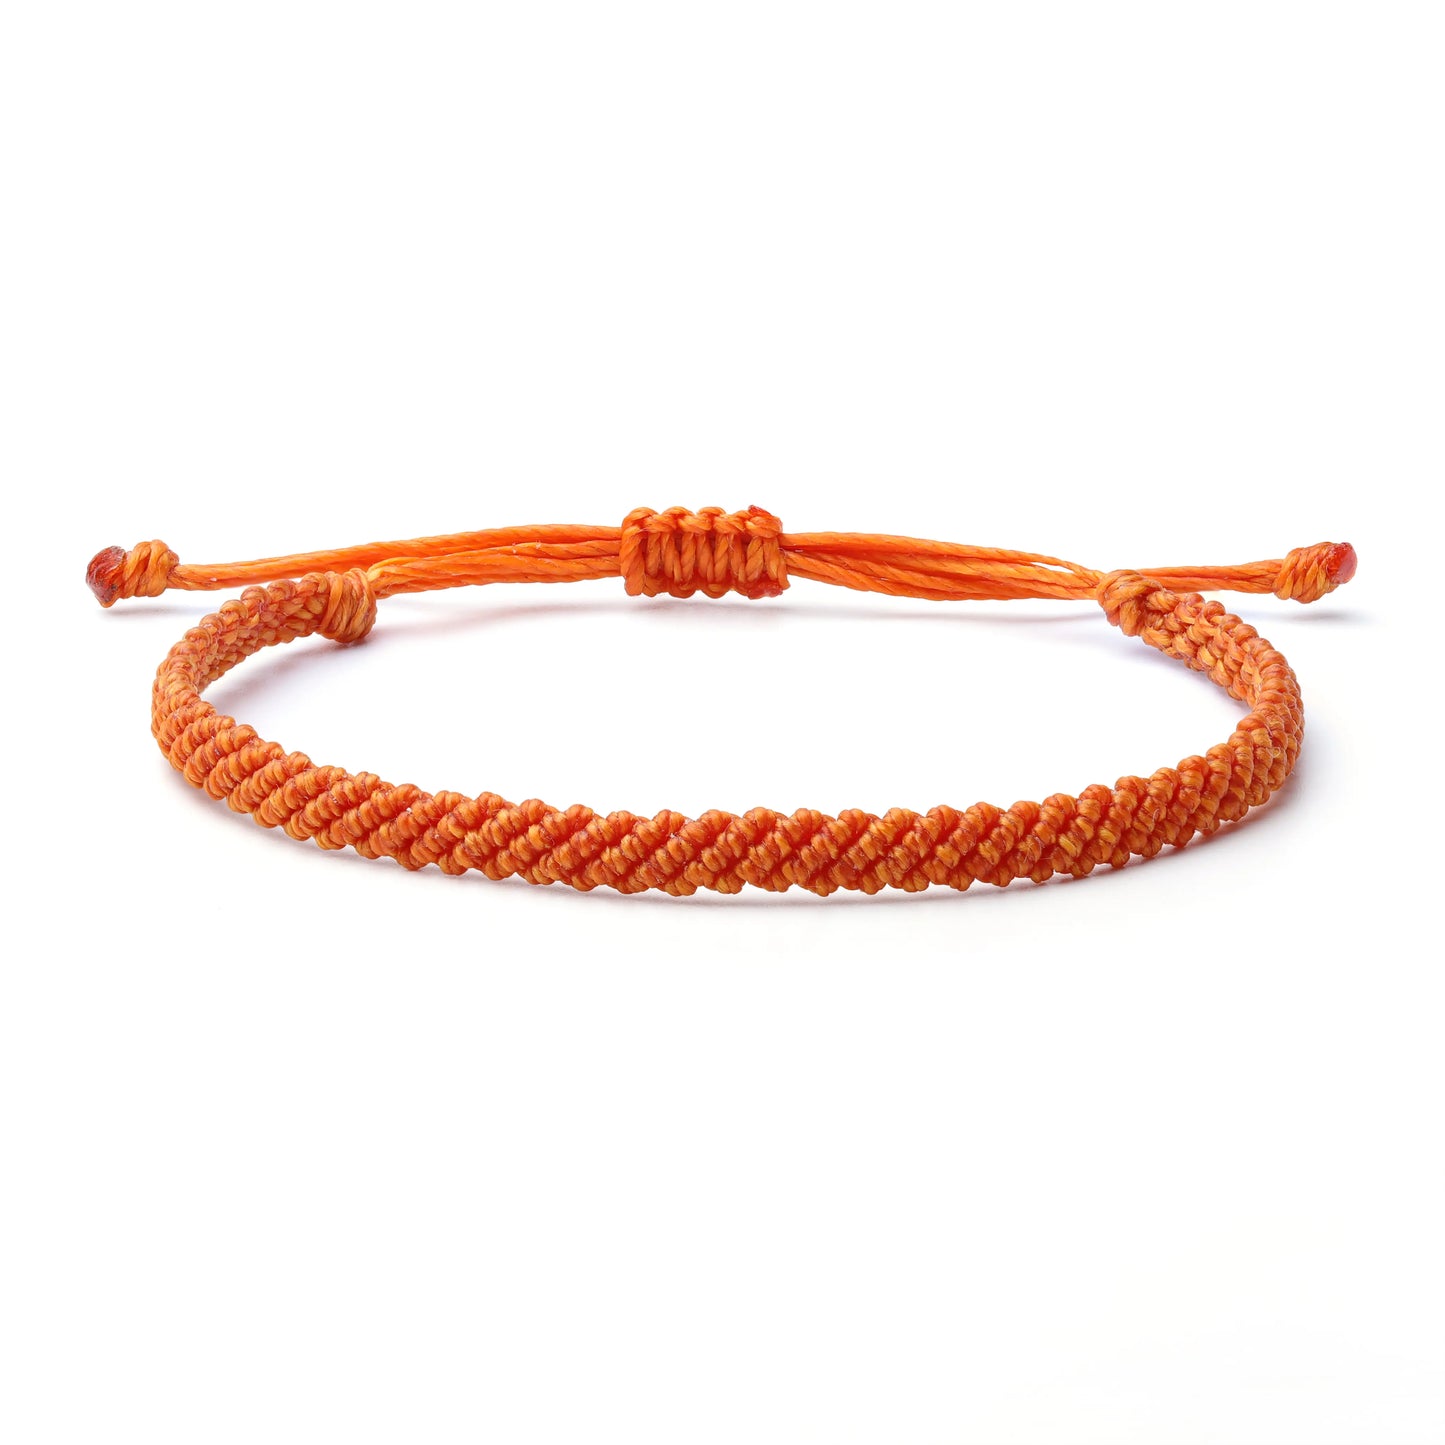 Linhasita lucky knots Tibetan Buddhist bracelet